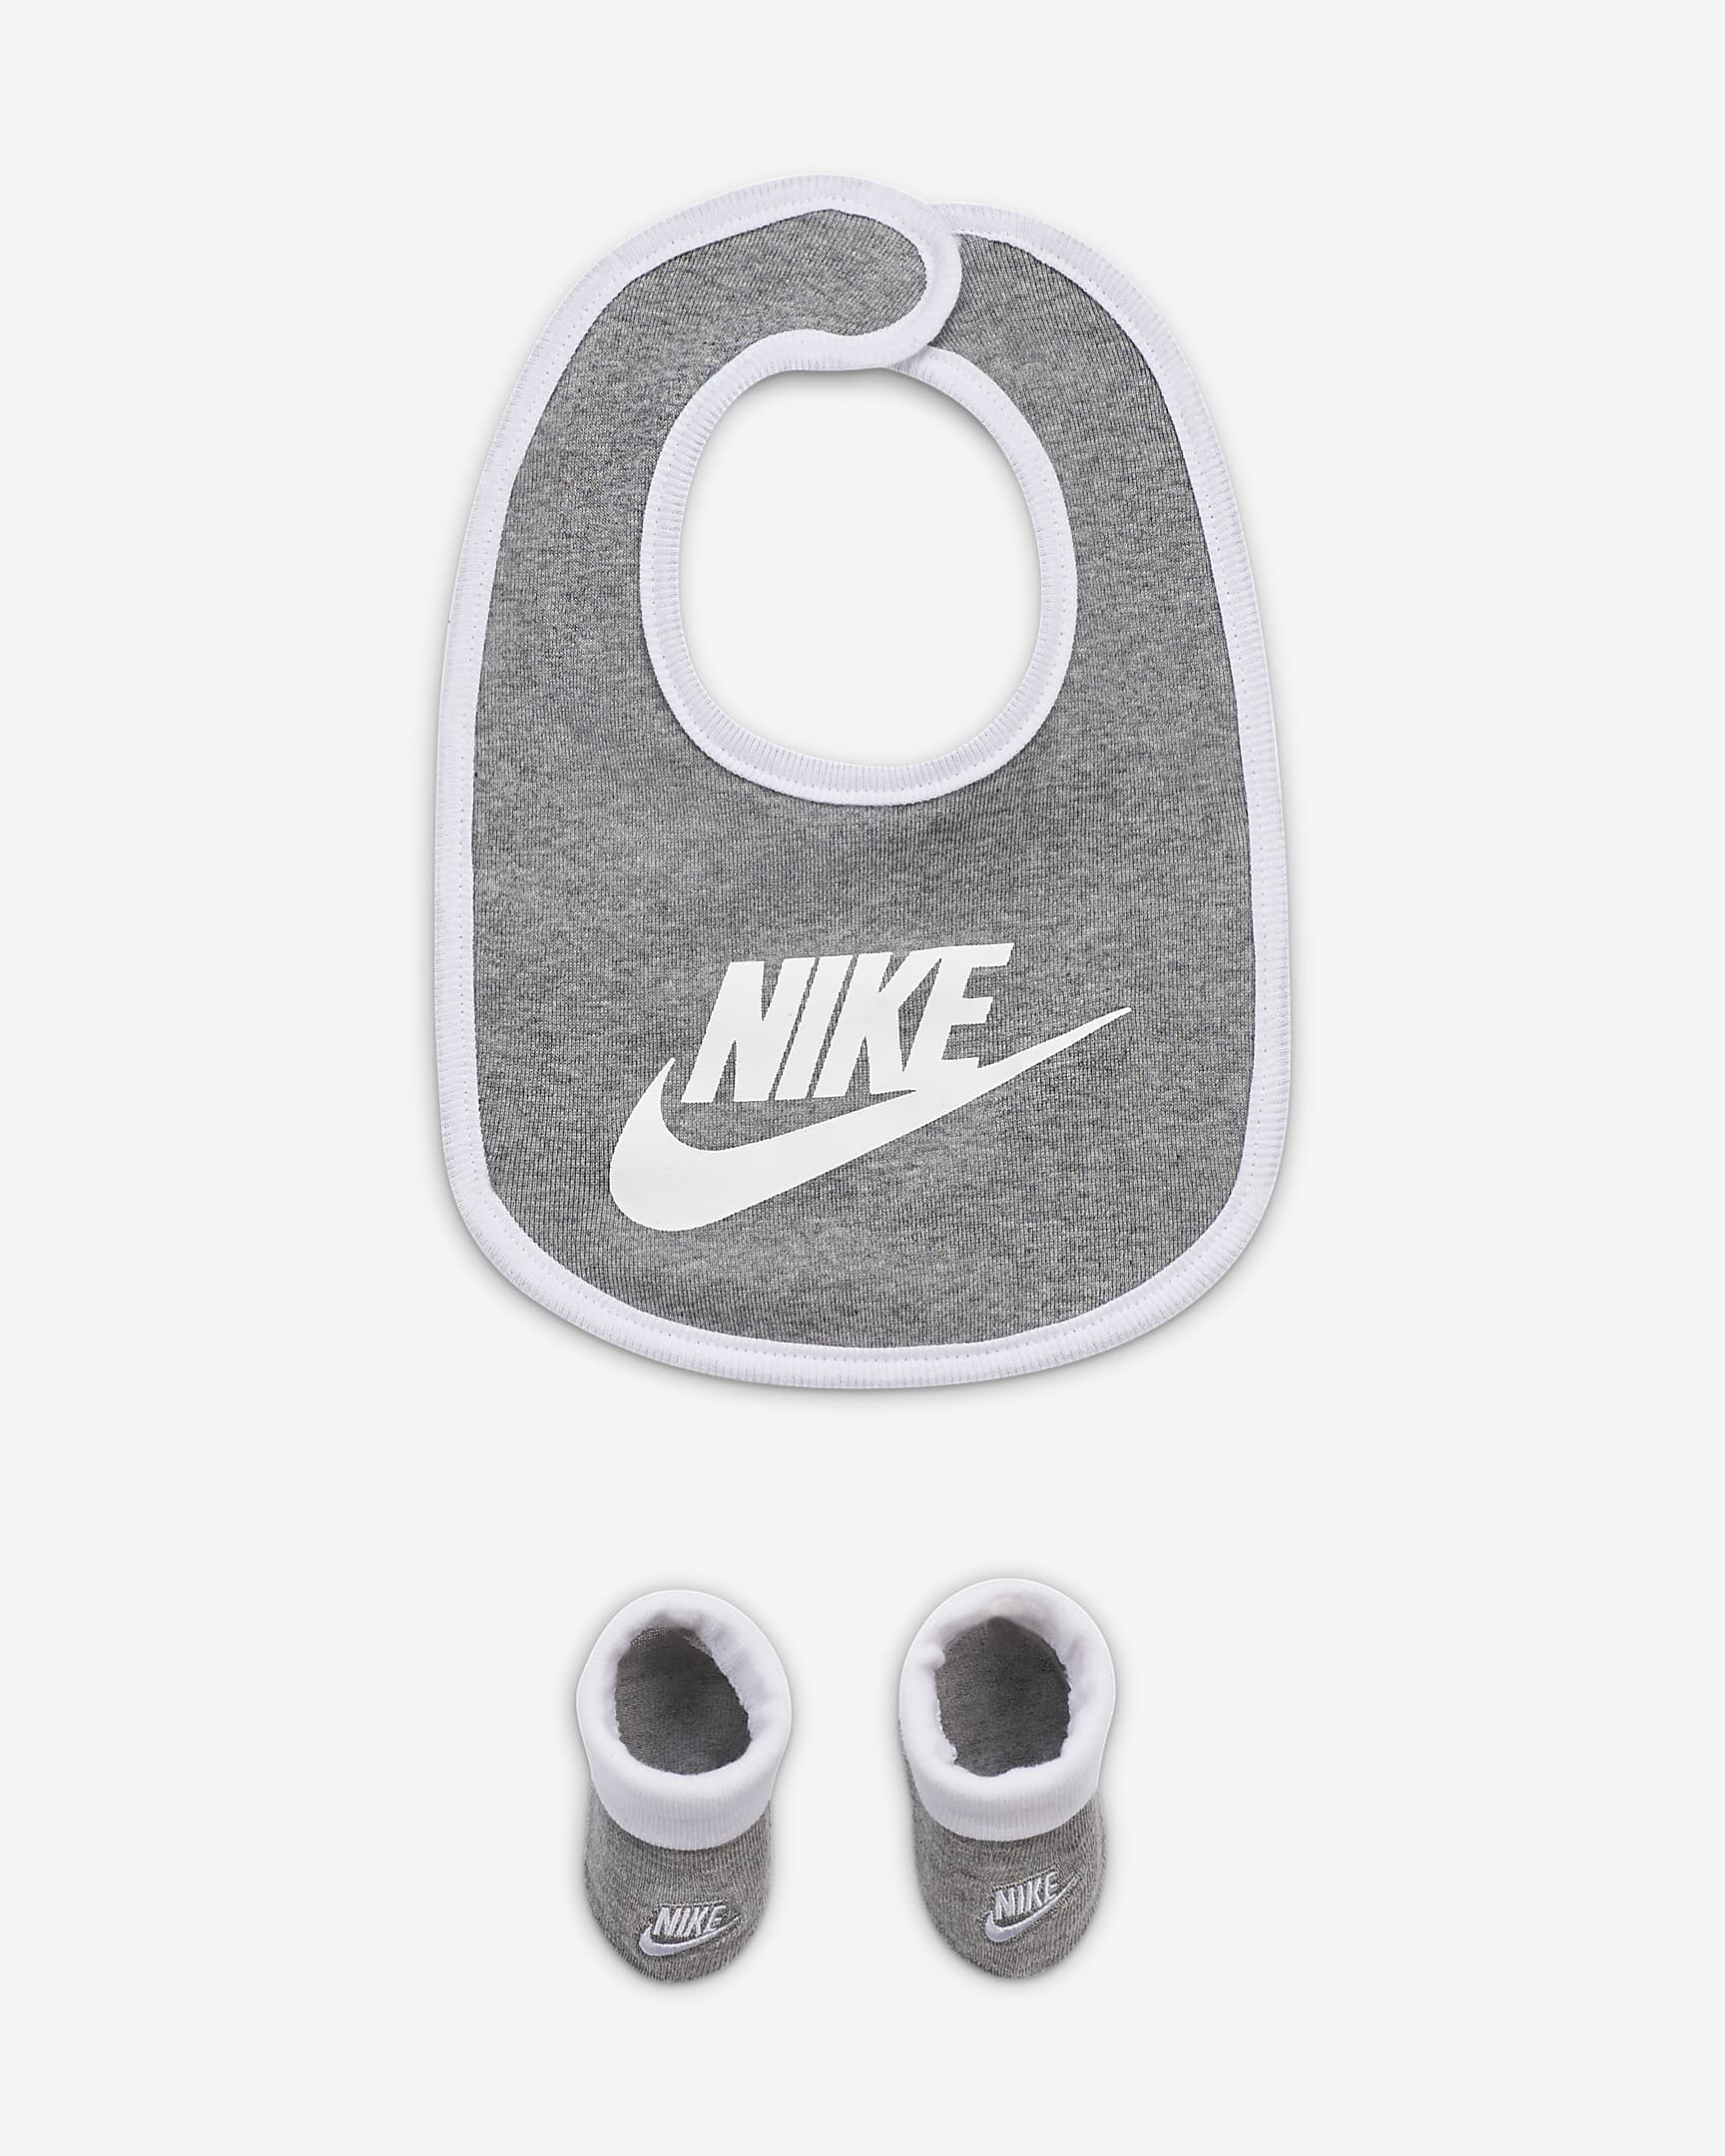 Nike Baby (0-6M) Classic Designs On Soft Knit 100% Cotton Bib and Booties Set (Dark Grey Heather)